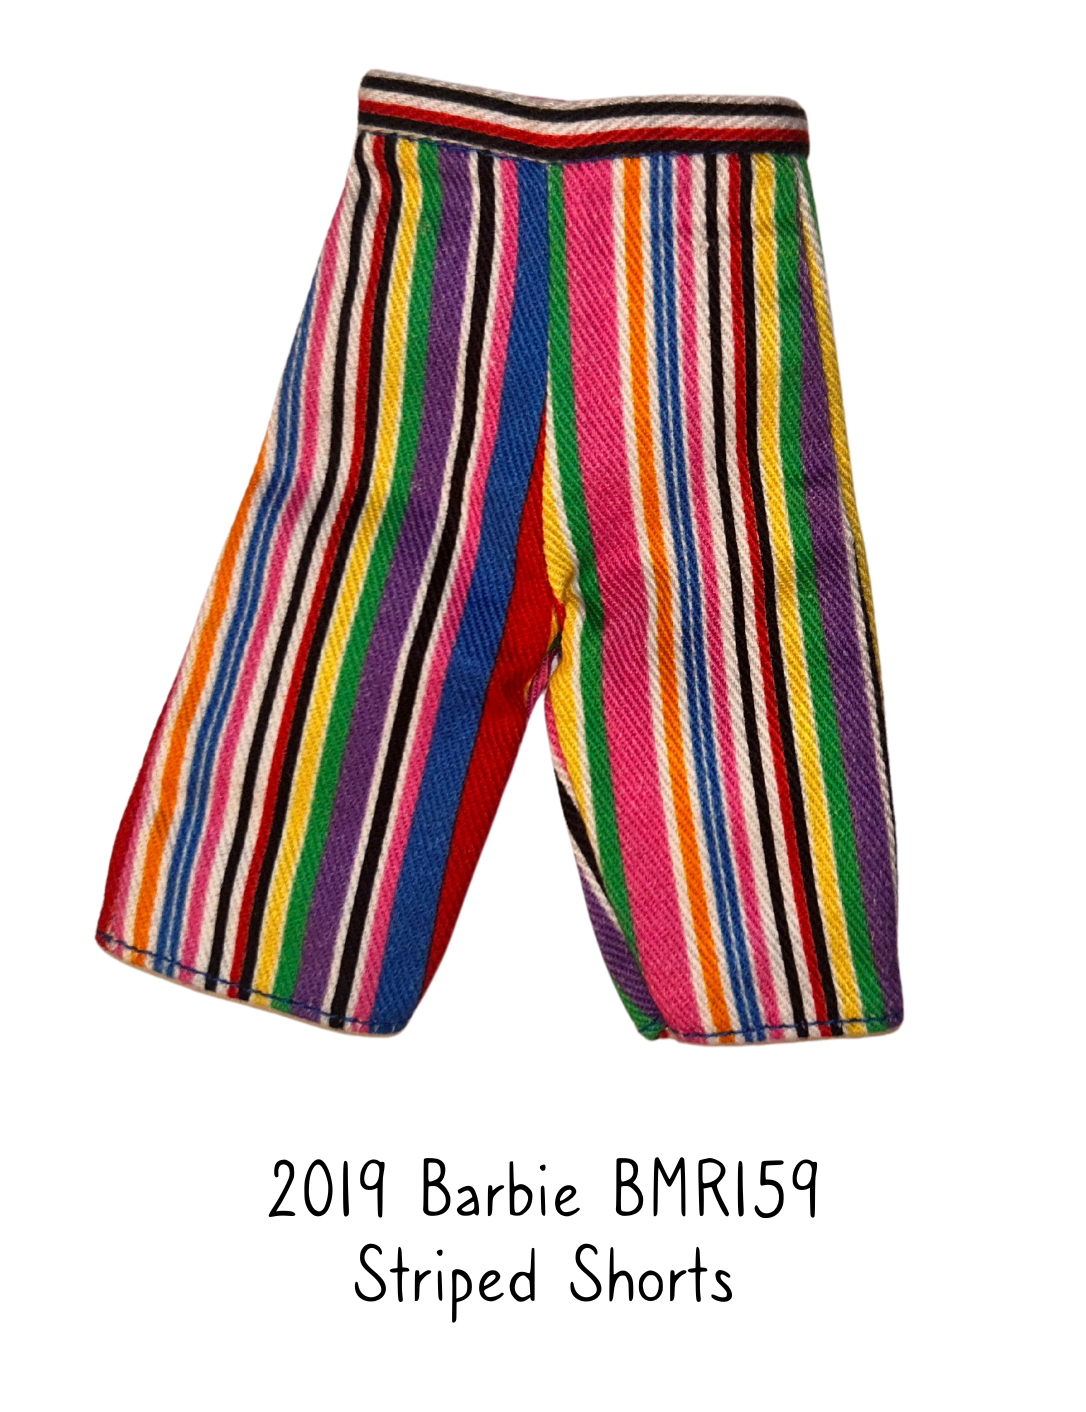 2019 Barbie BMR1959 Striped Shorts